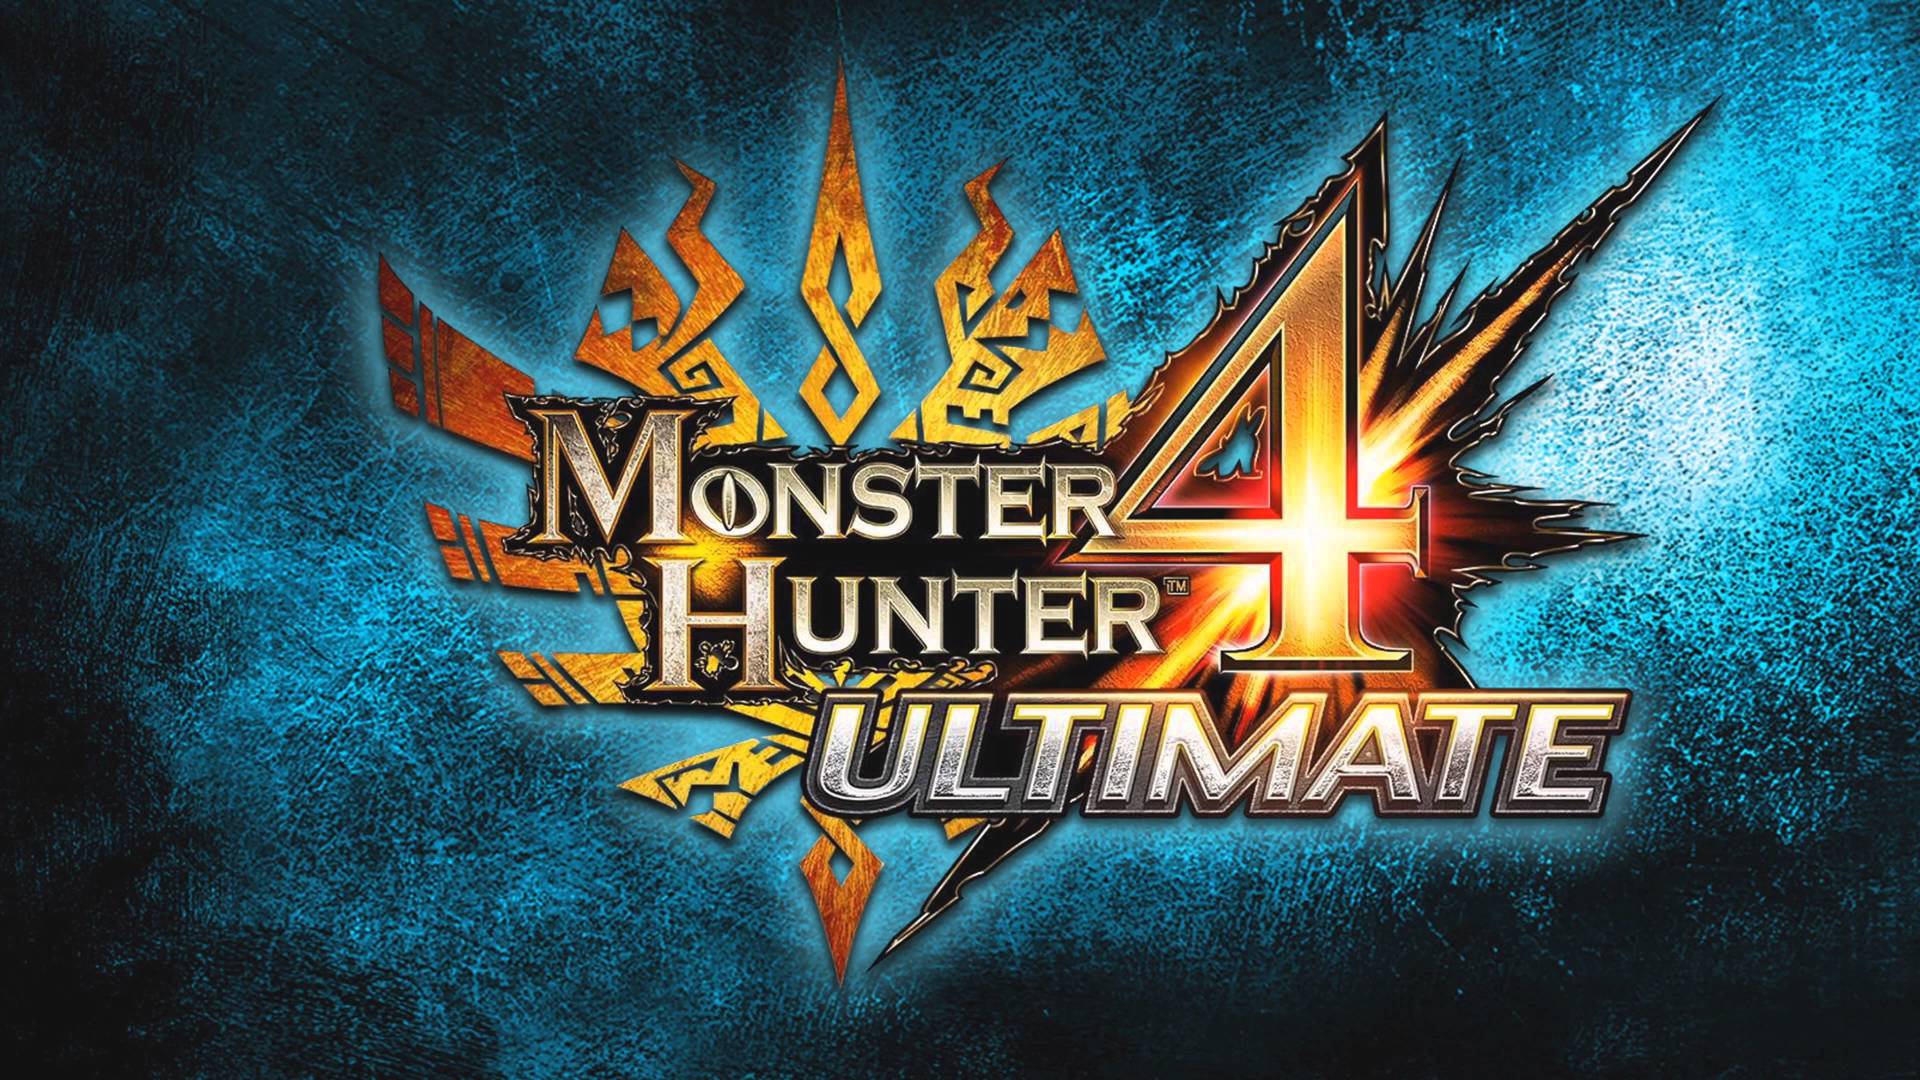 Video Game Monster Hunter 4 Ultimate HD Wallpaper | Background Image